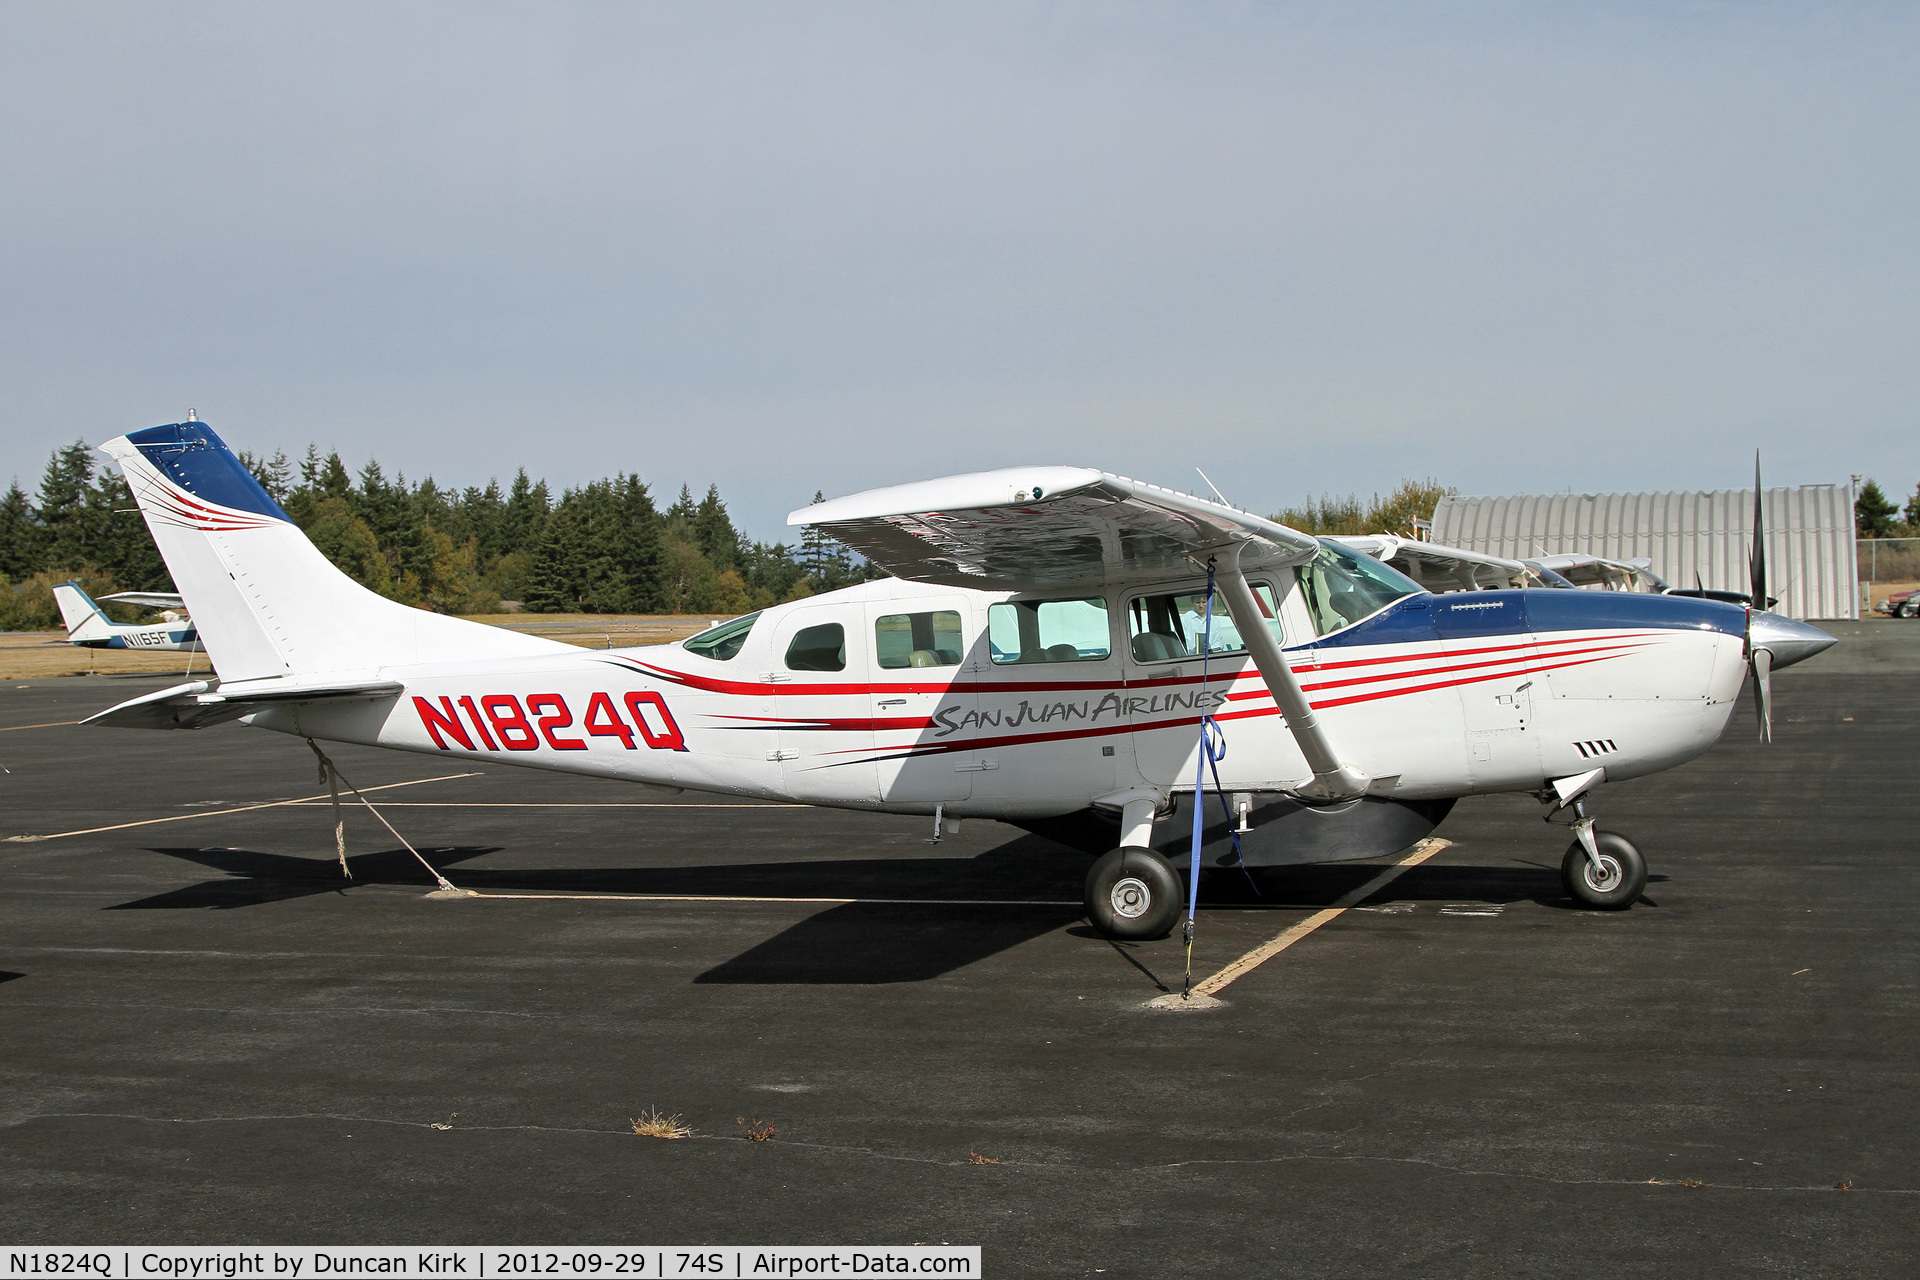 N1824Q, 1984 Cessna 207A Stationair 8 C/N 20700788, The only white Cessna 207 in San Juans fleet